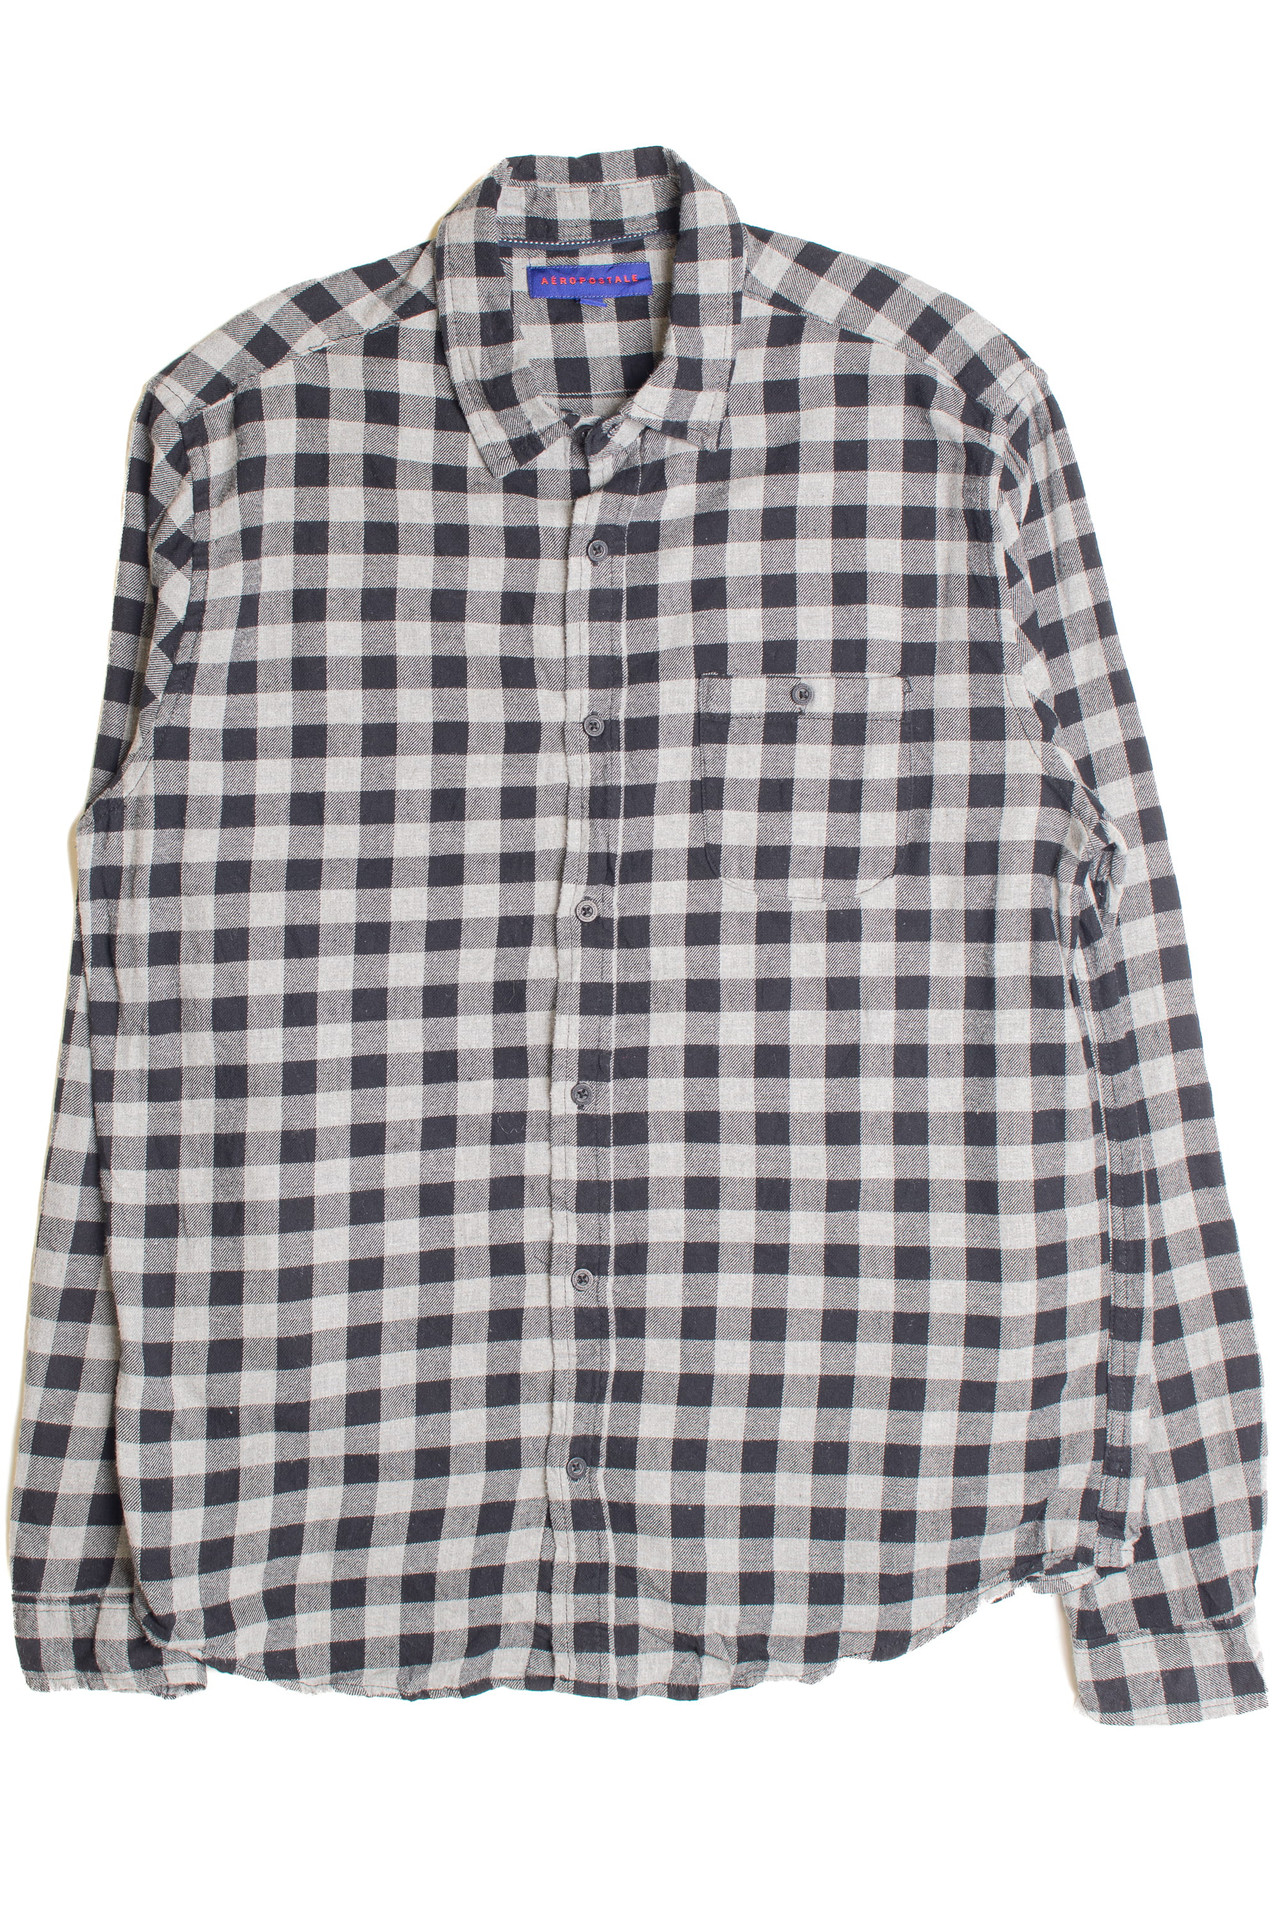 Aeropostale Flannel Shirt (2000s) - Ragstock.com